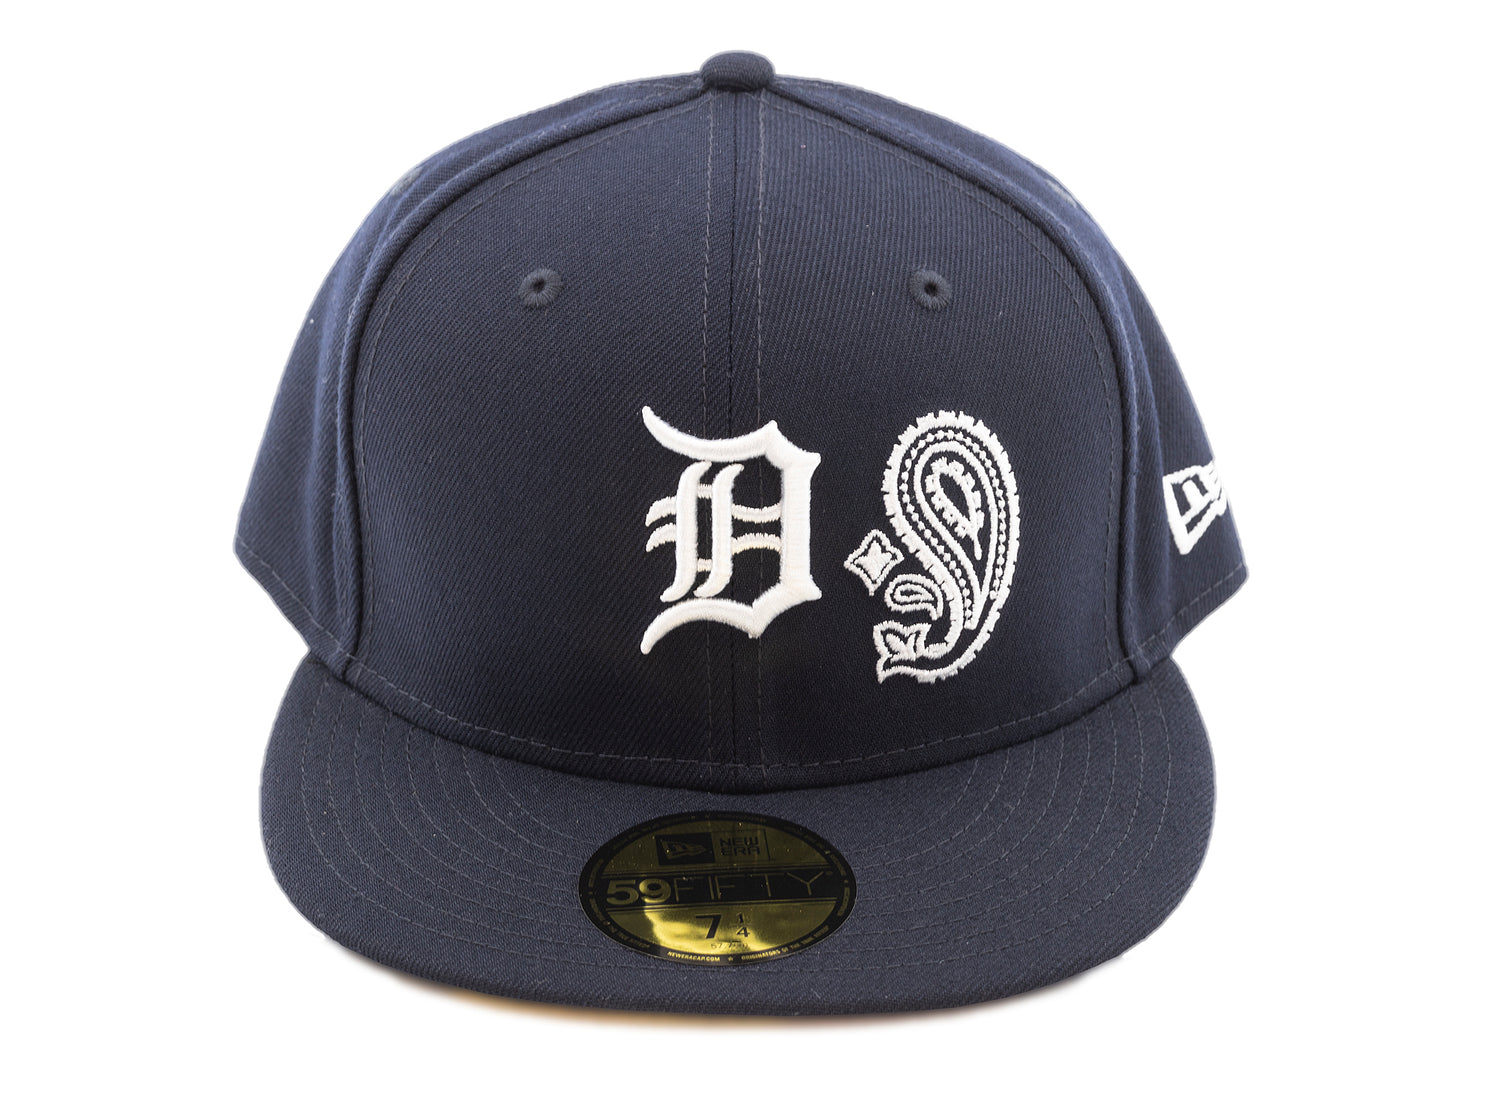 Detroit Tigers Hats - Accessories